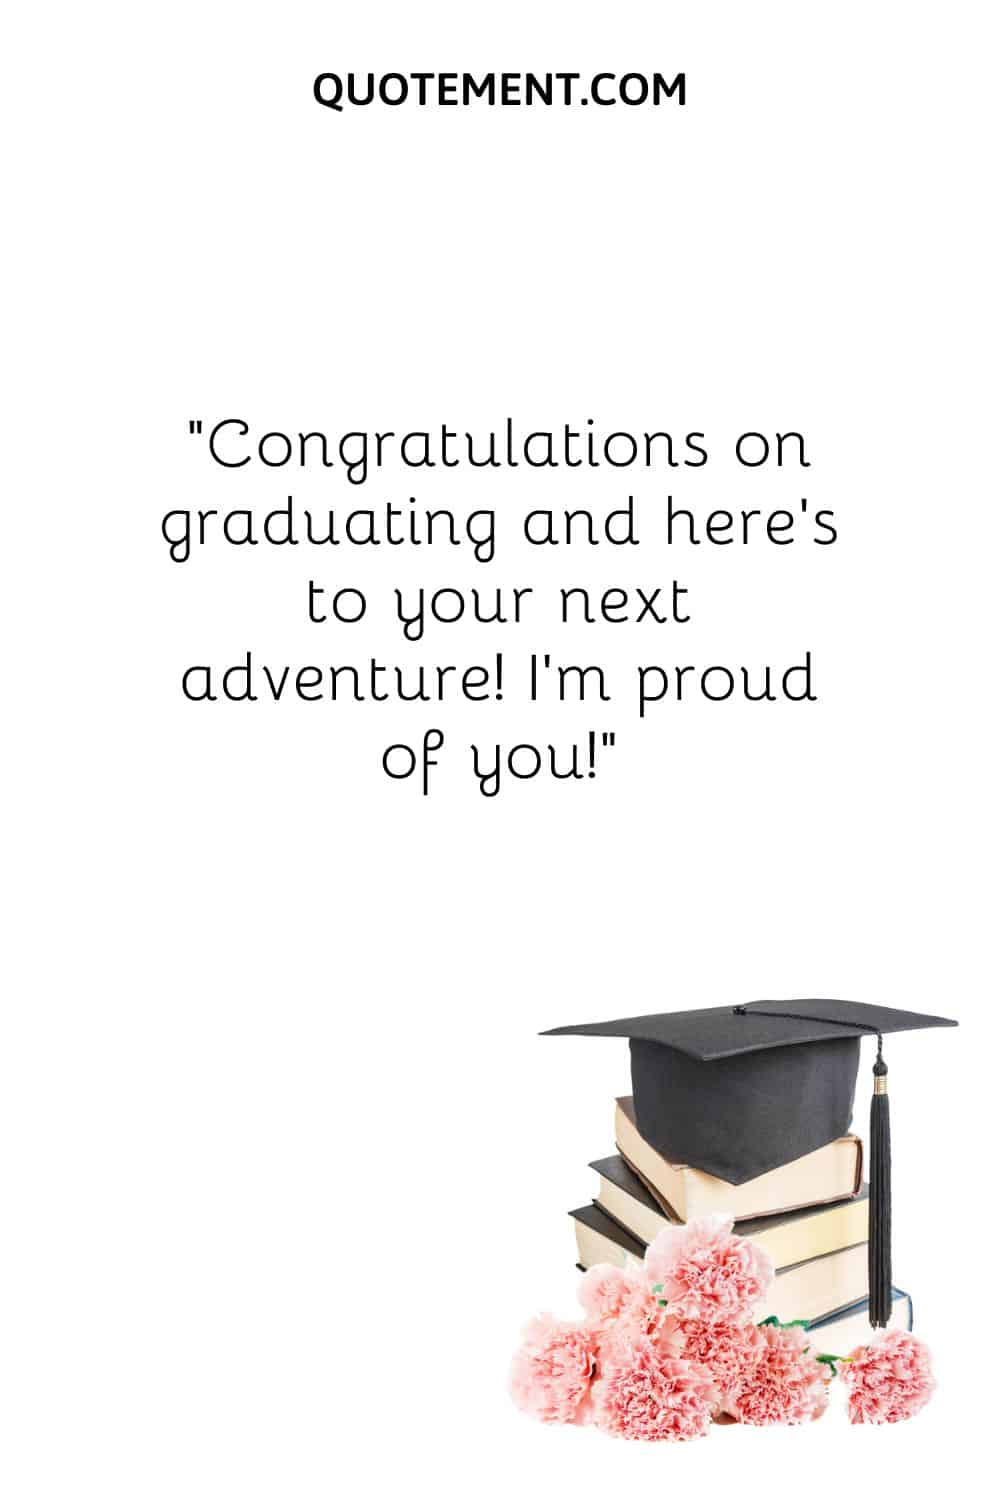 Best graduation wish for friend, books, carnations and graduation hat.